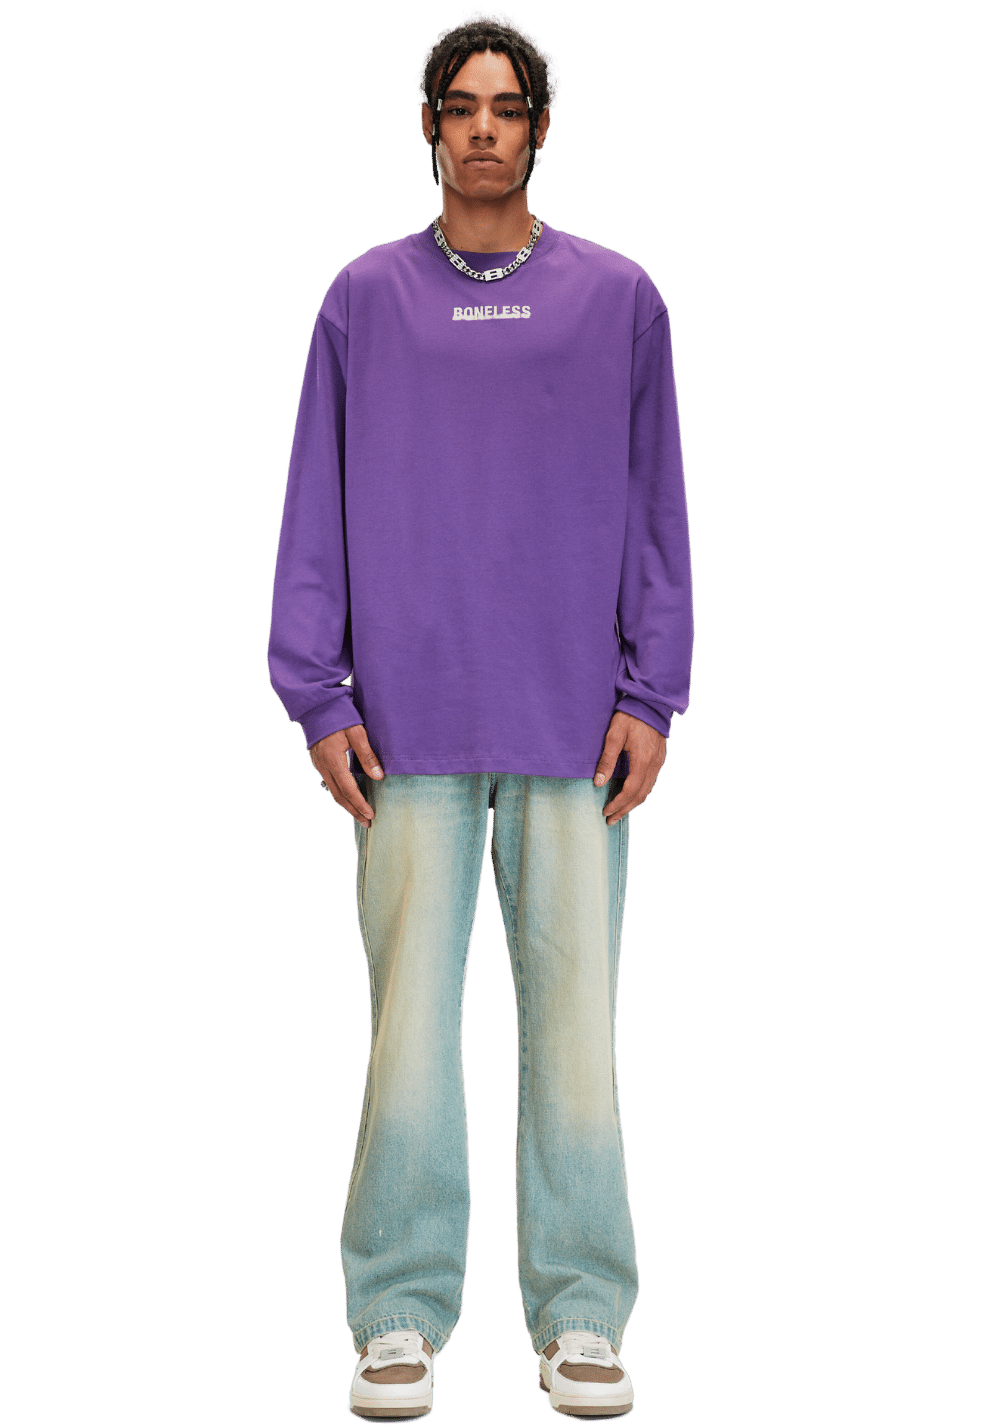 Water Reflection Sweatshirt - PSYLOS 1, Water Reflection Sweatshirt, Sweatshirts, Boneless, PSYLOS 1